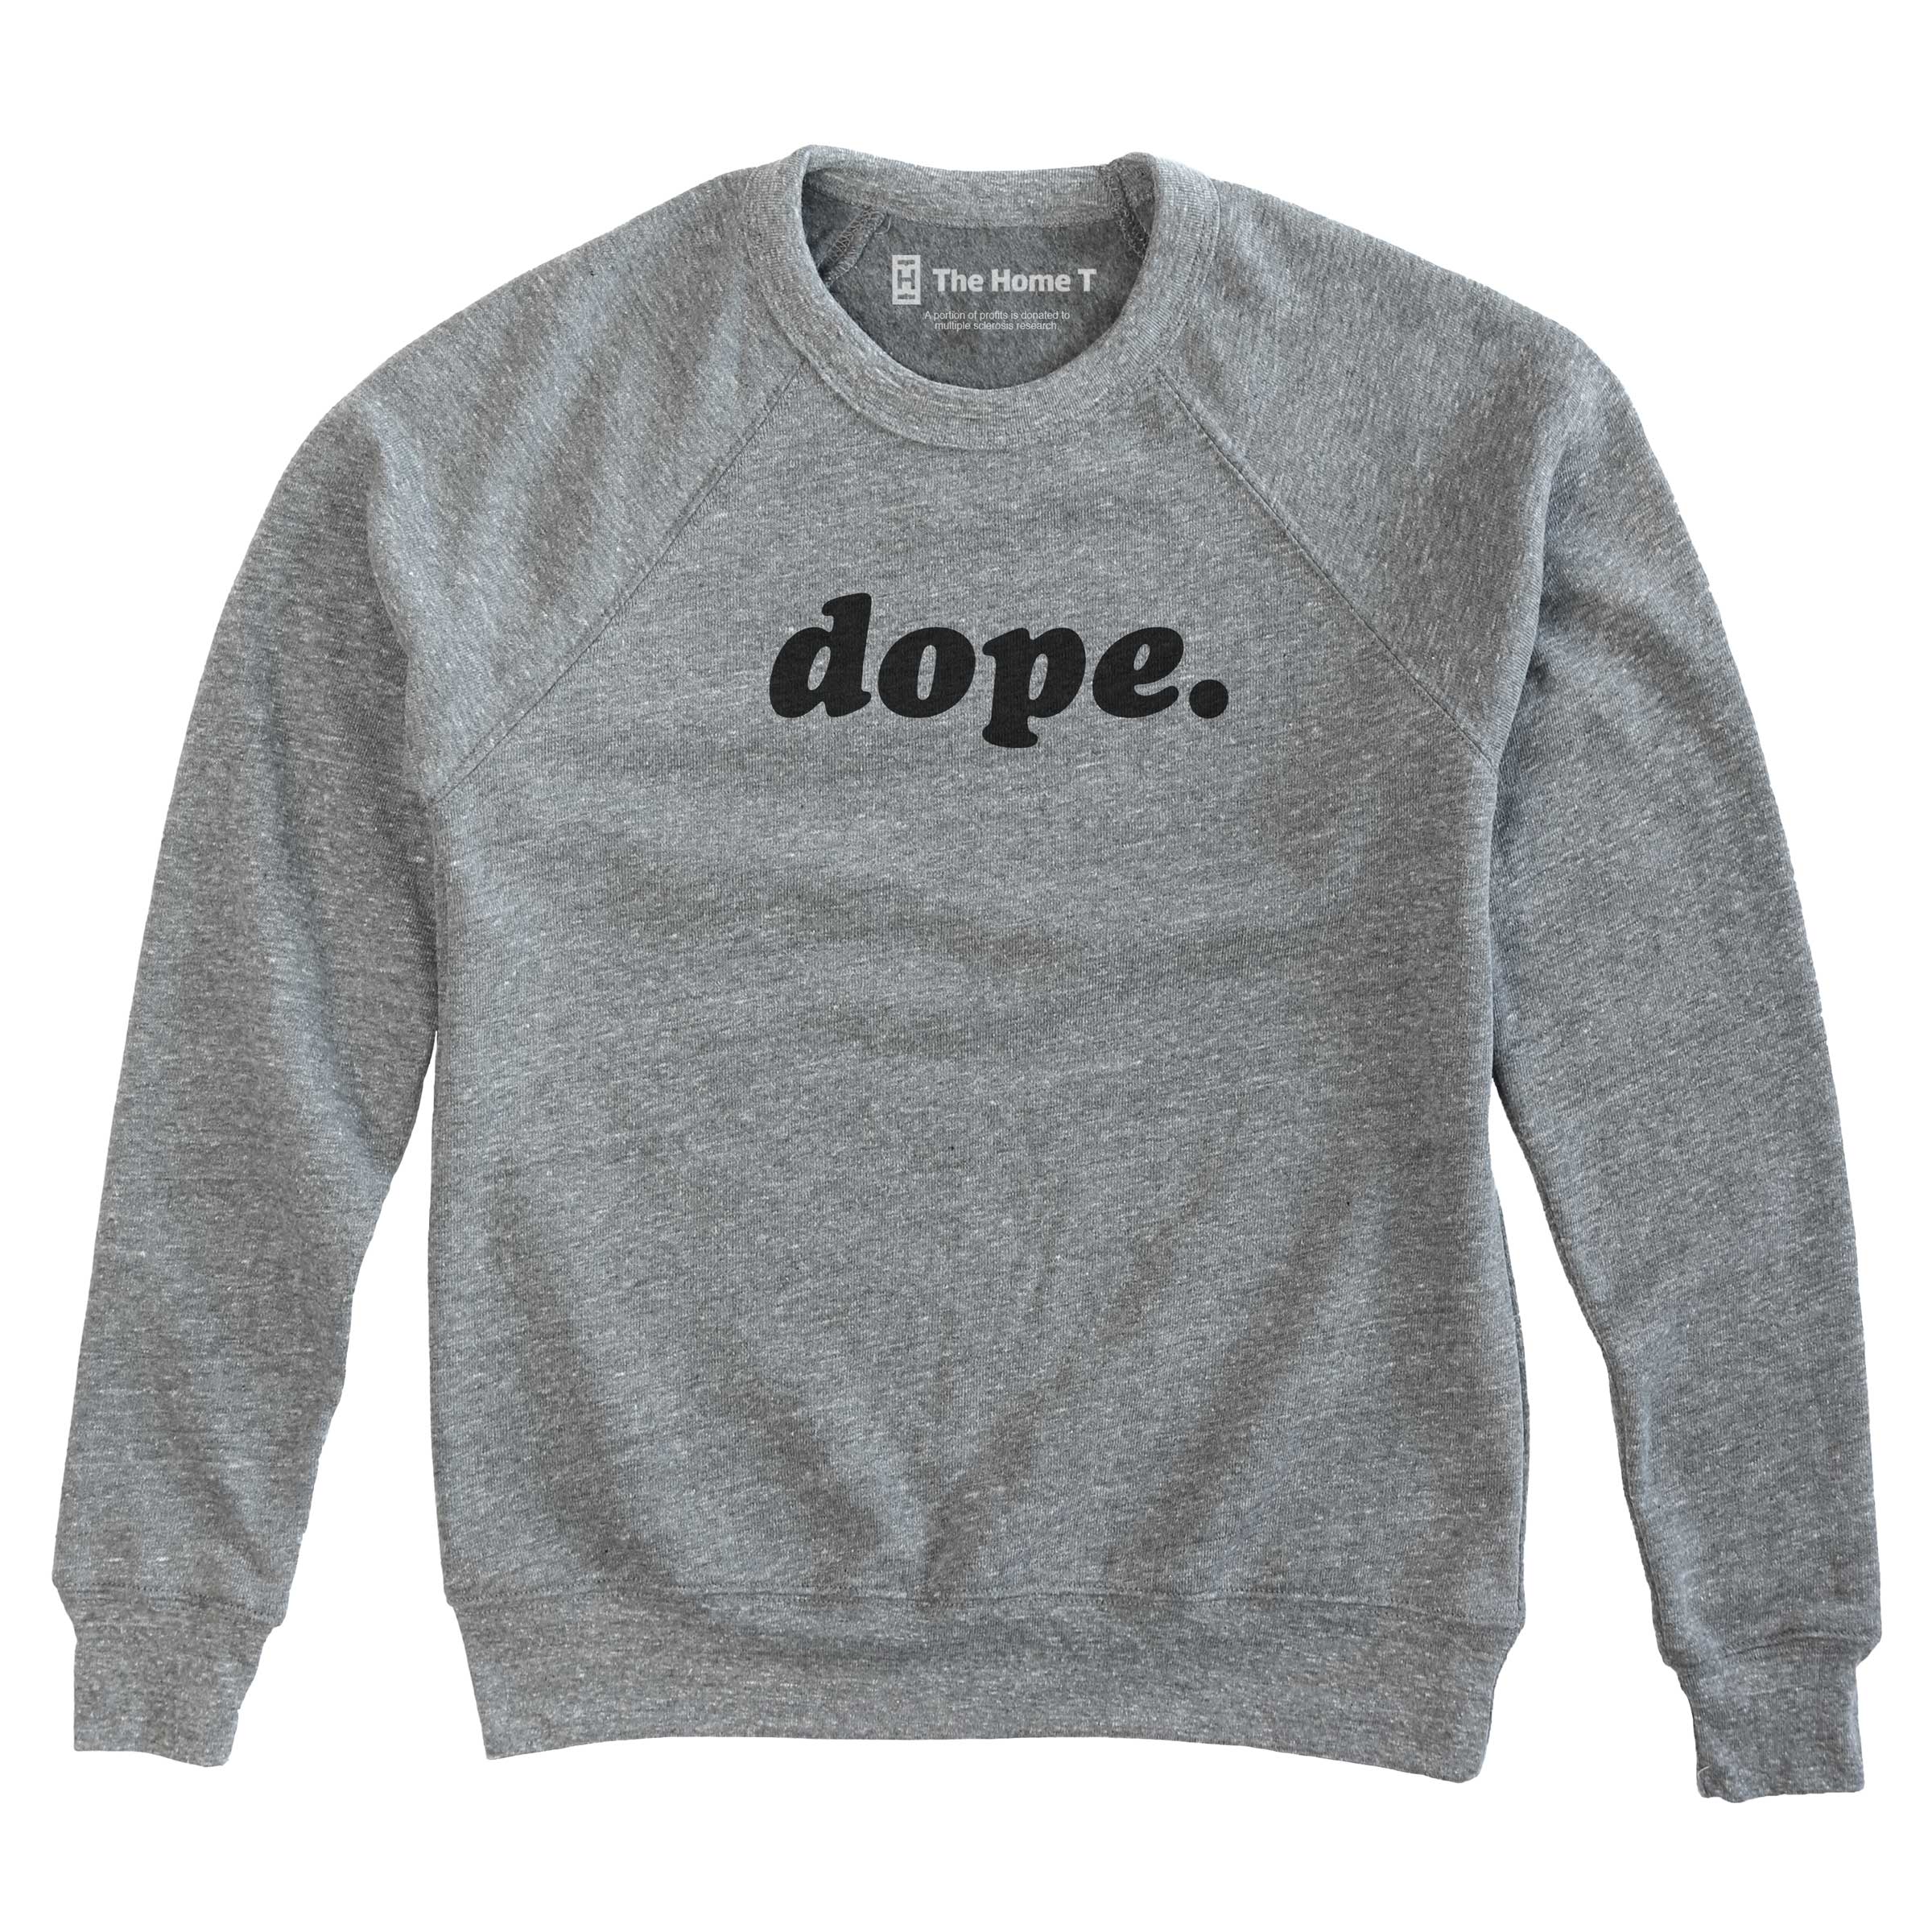 Dope. The Home T XS SWEATSHIRT